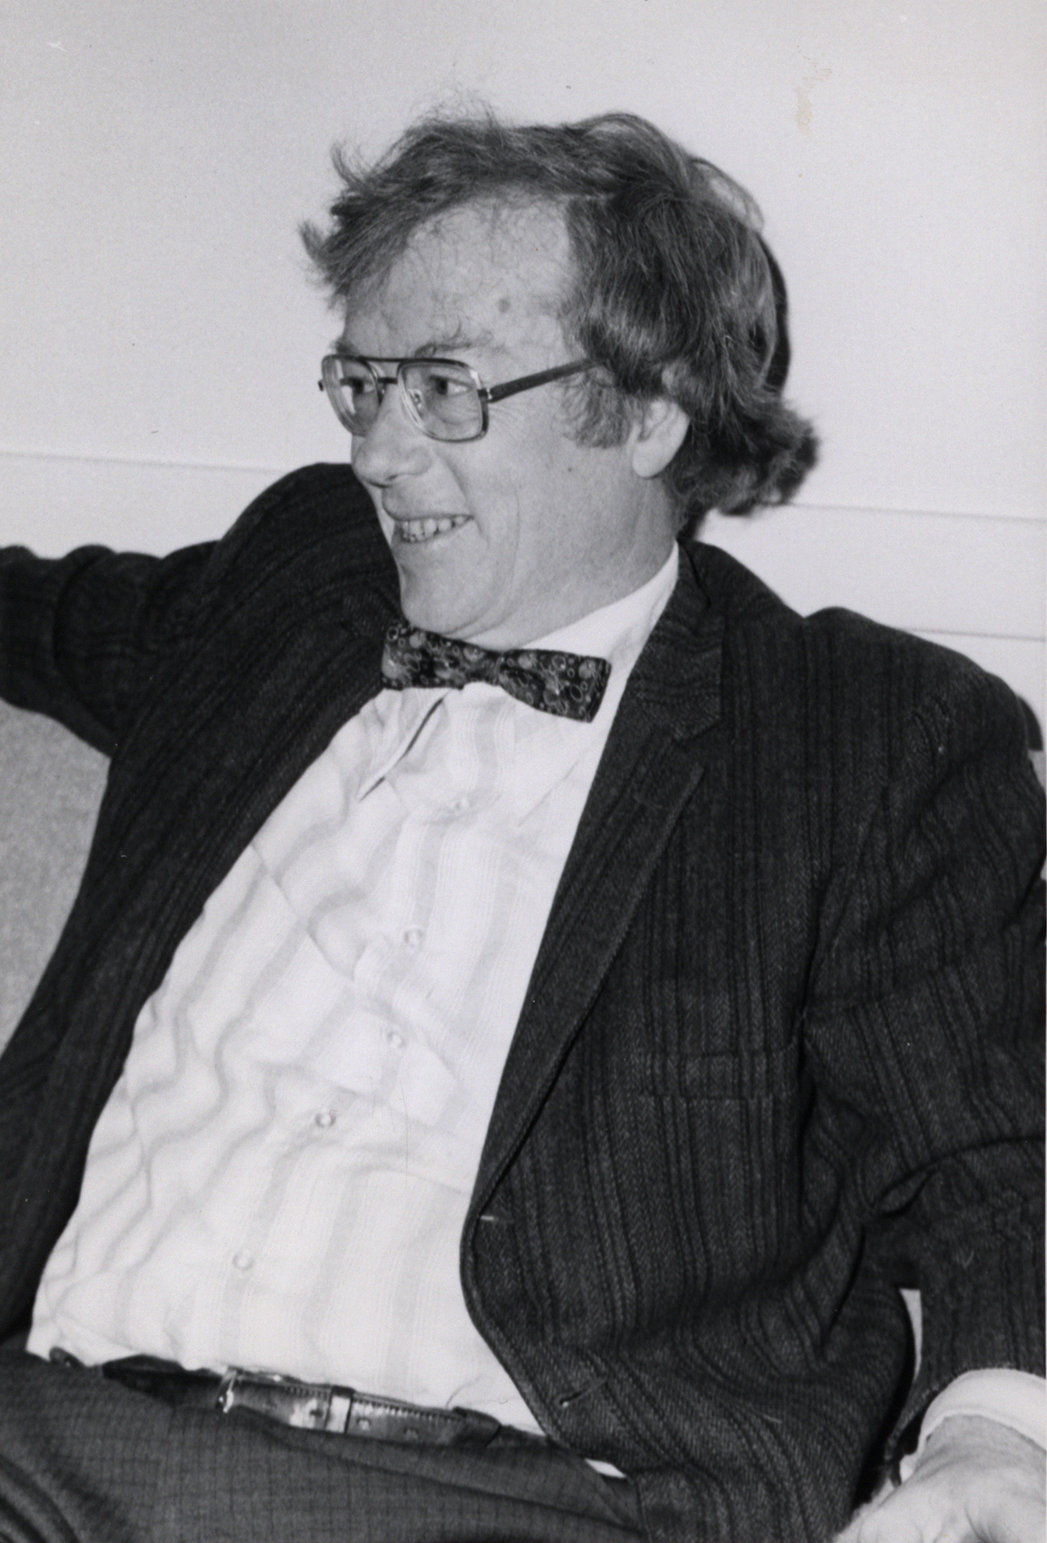 Bill Bauer seated wearing bowtie